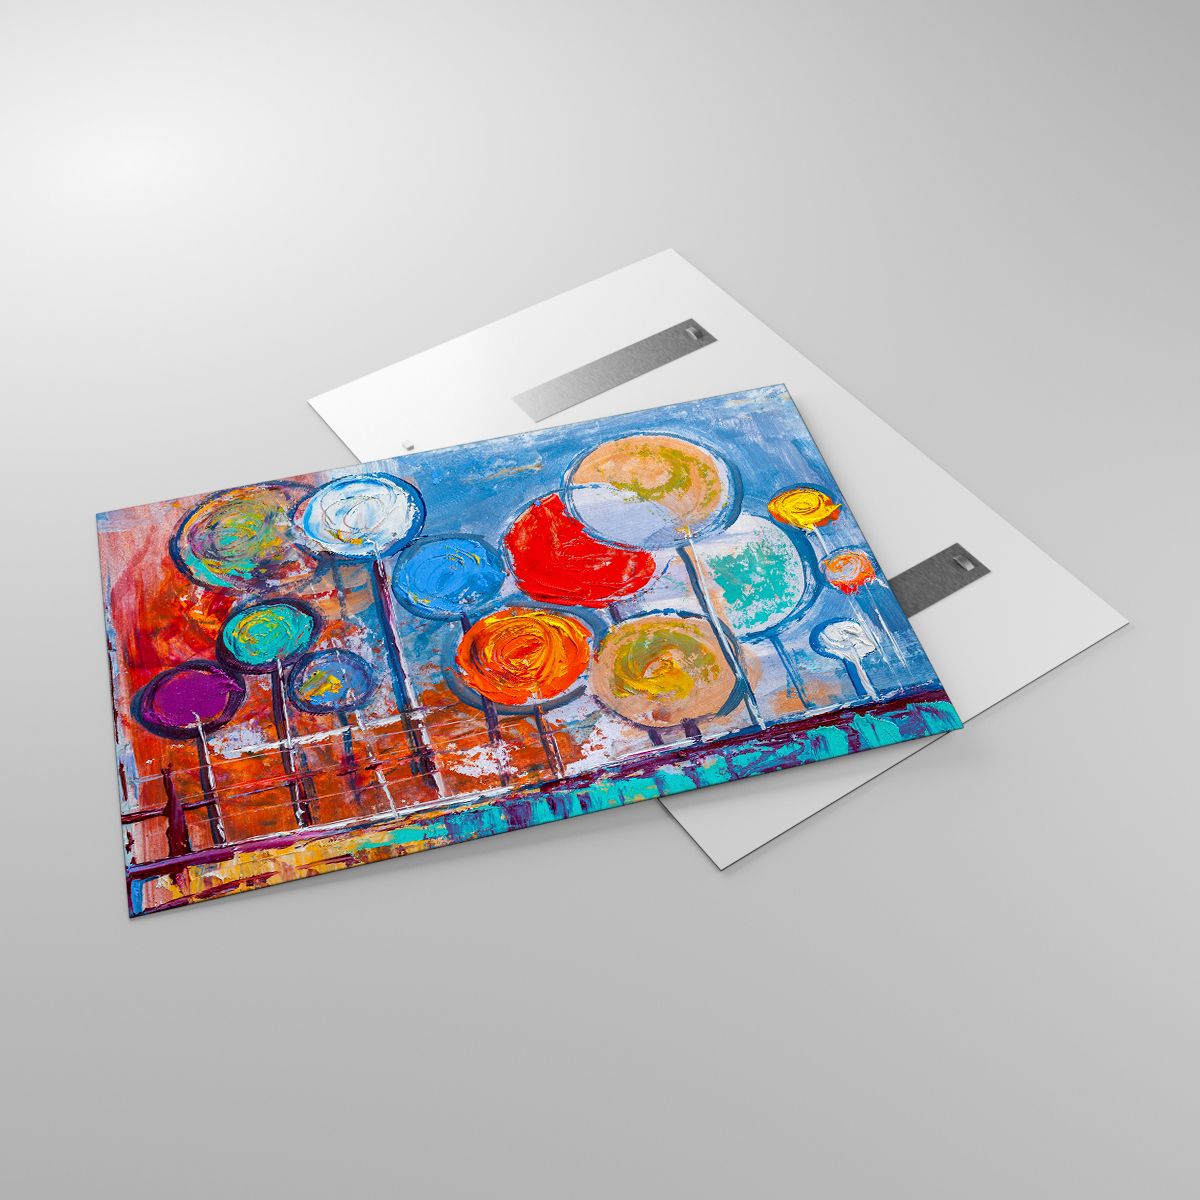 Glasbild Bunte Luftballons, Glasbild Abstraktion, Glasbild Für Kinder, Glasbild Kunst, Glasbild Malerei